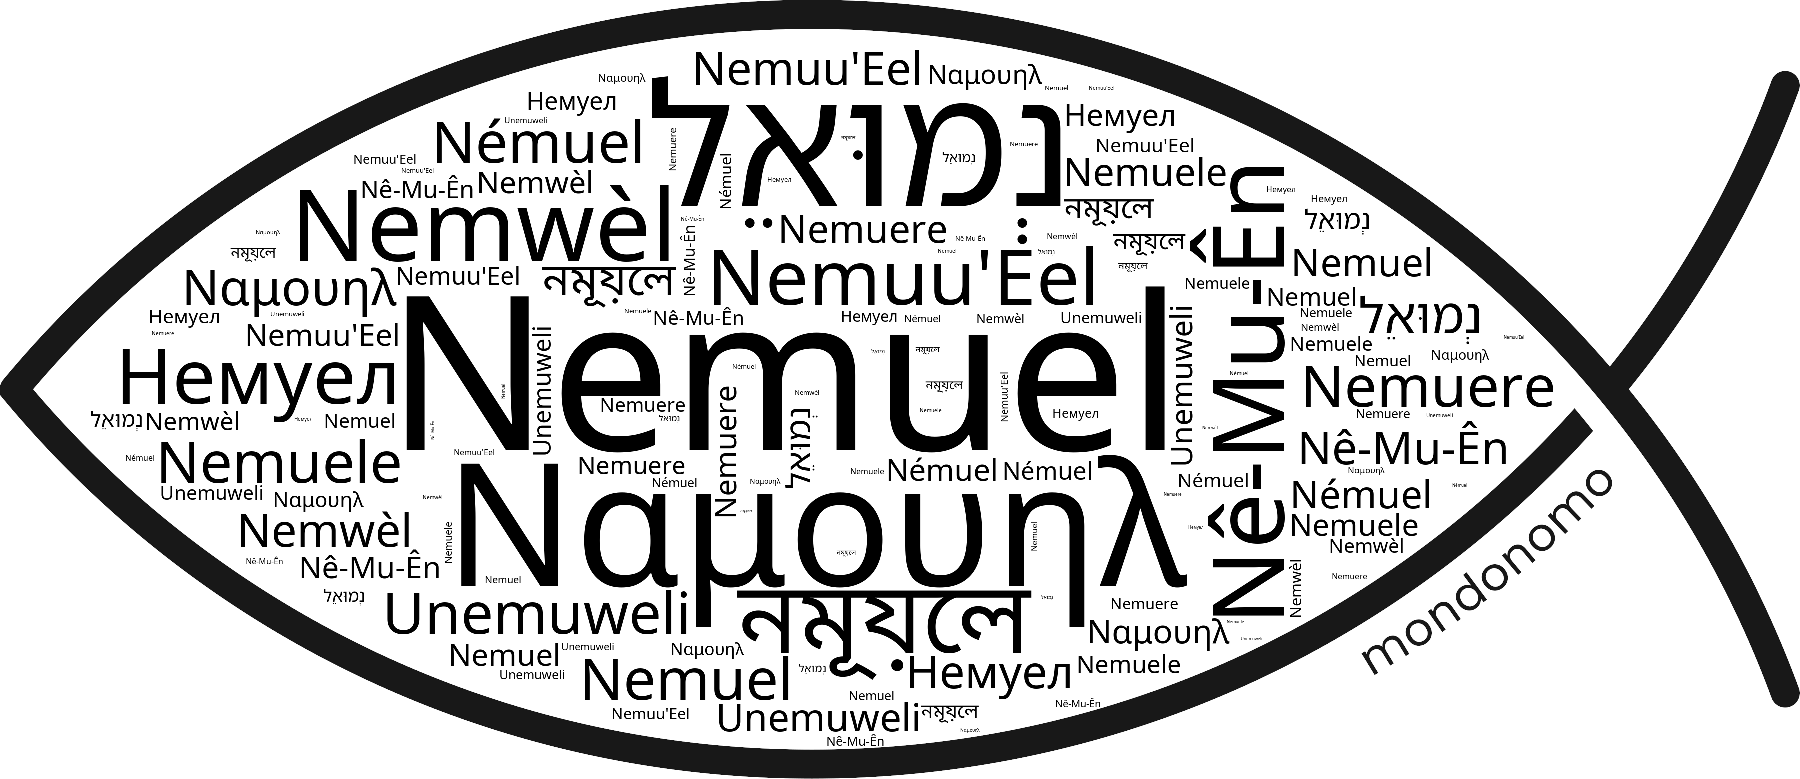 Name Nemuel in the world's Bibles